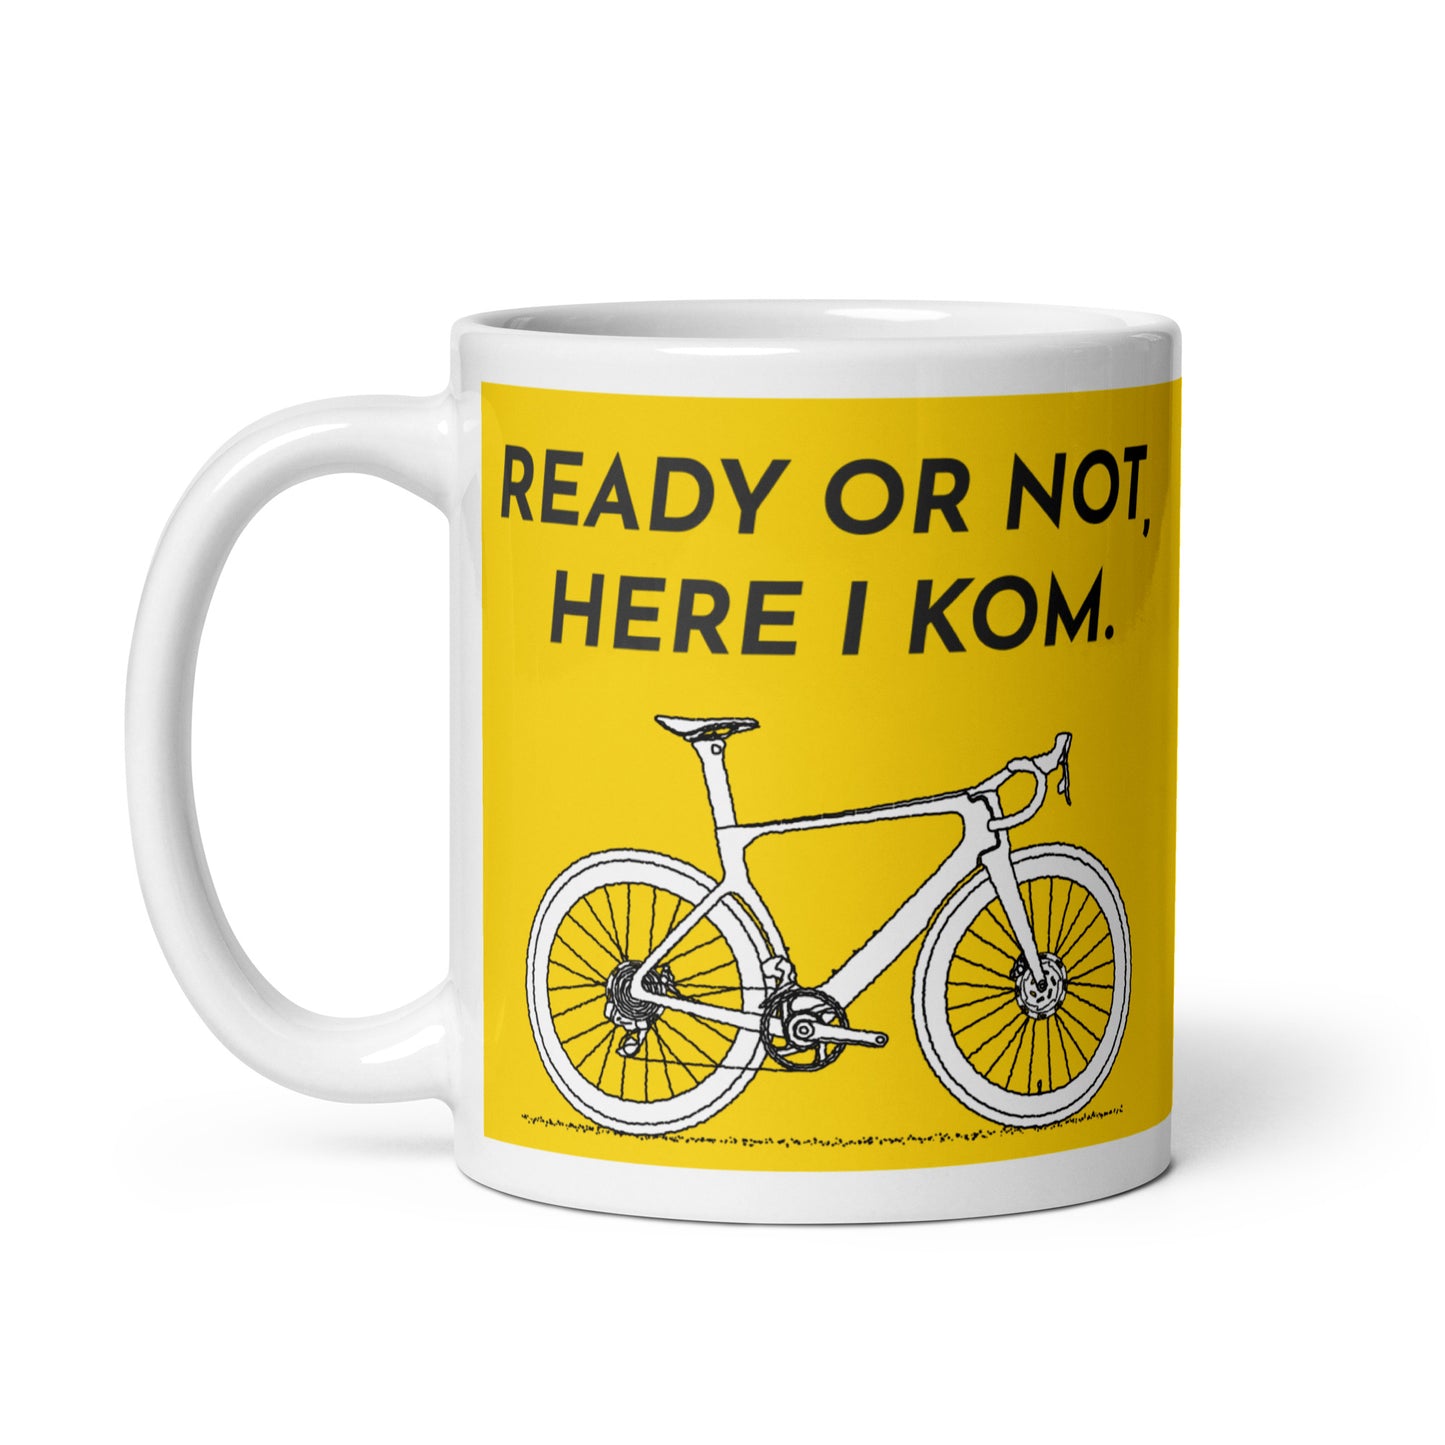 Ready Or Not, Here I KOM, Yellow Bicycle Mug M079